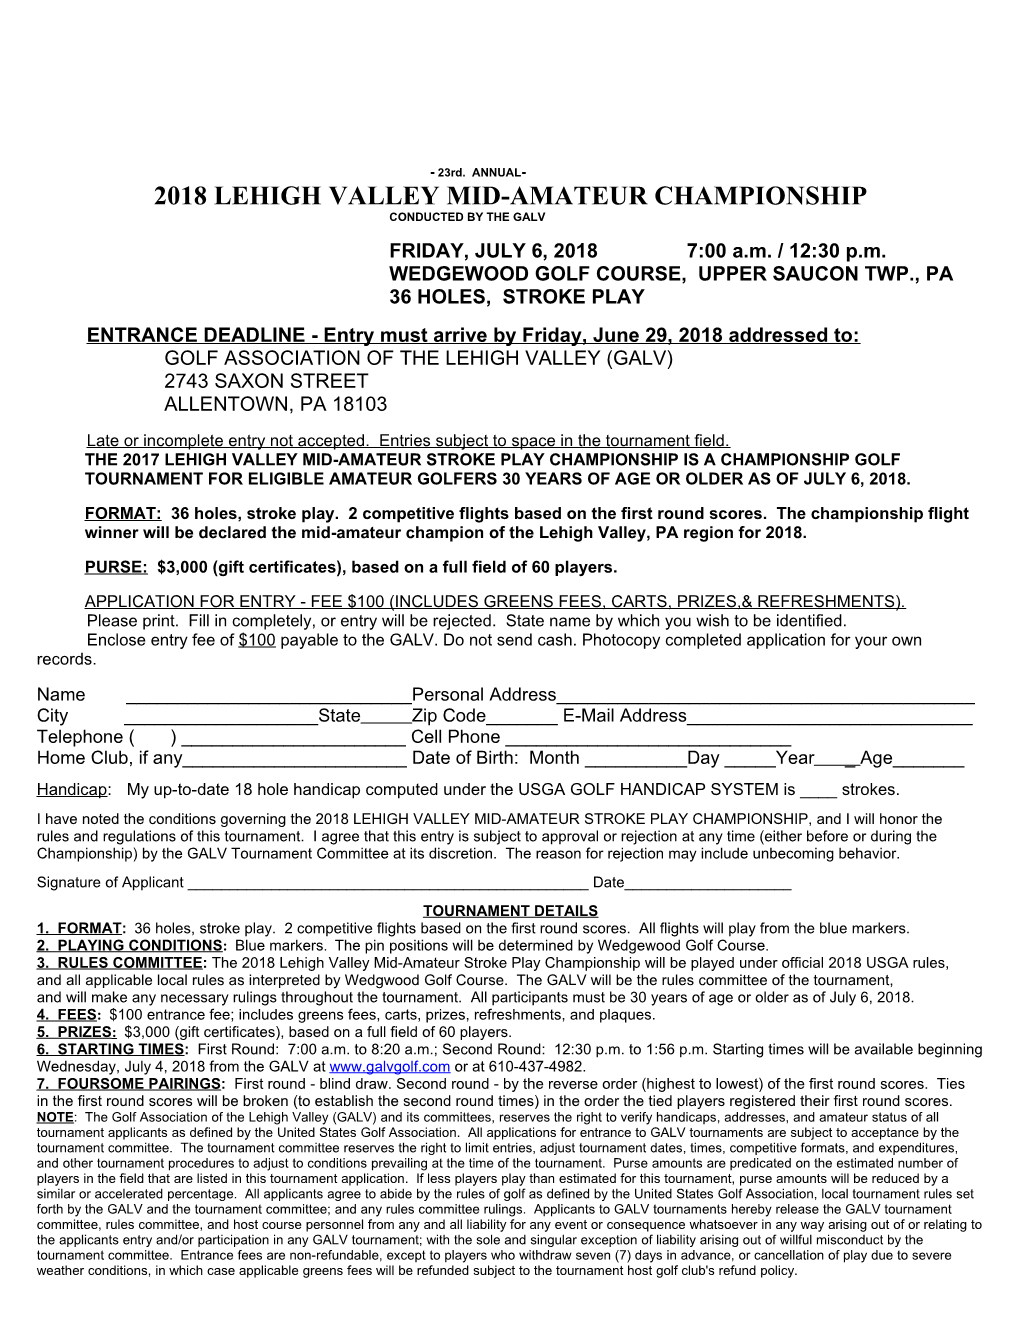 2018 Lehigh Valley Mid-Amateur Championship